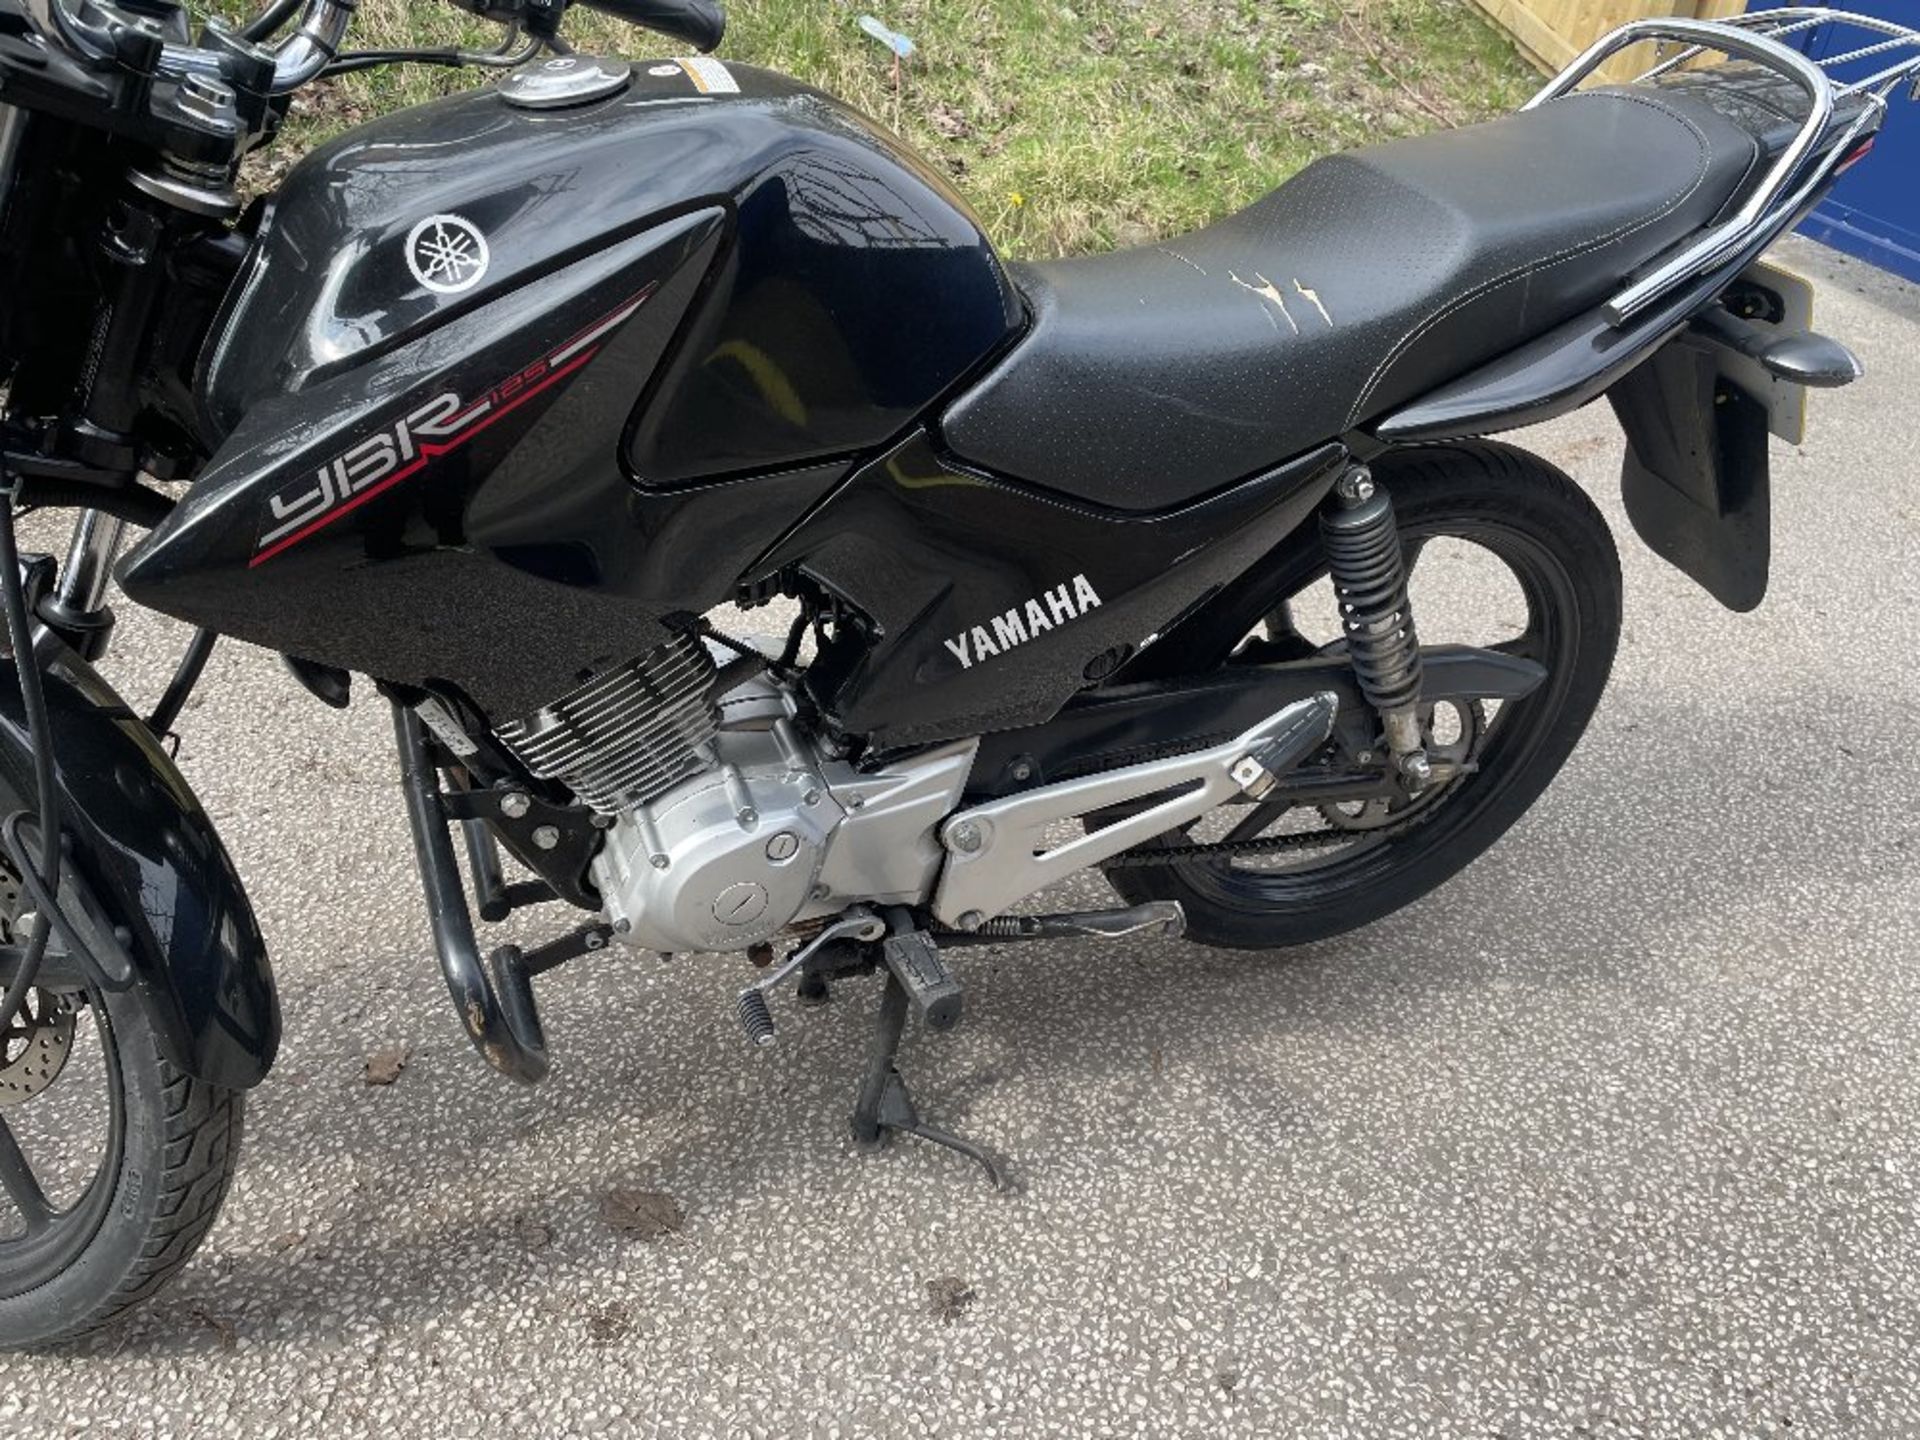 Yamaha YBR125 Petrol Motorcycle | PL15 VPM | 10,899 Miles - Image 12 of 13